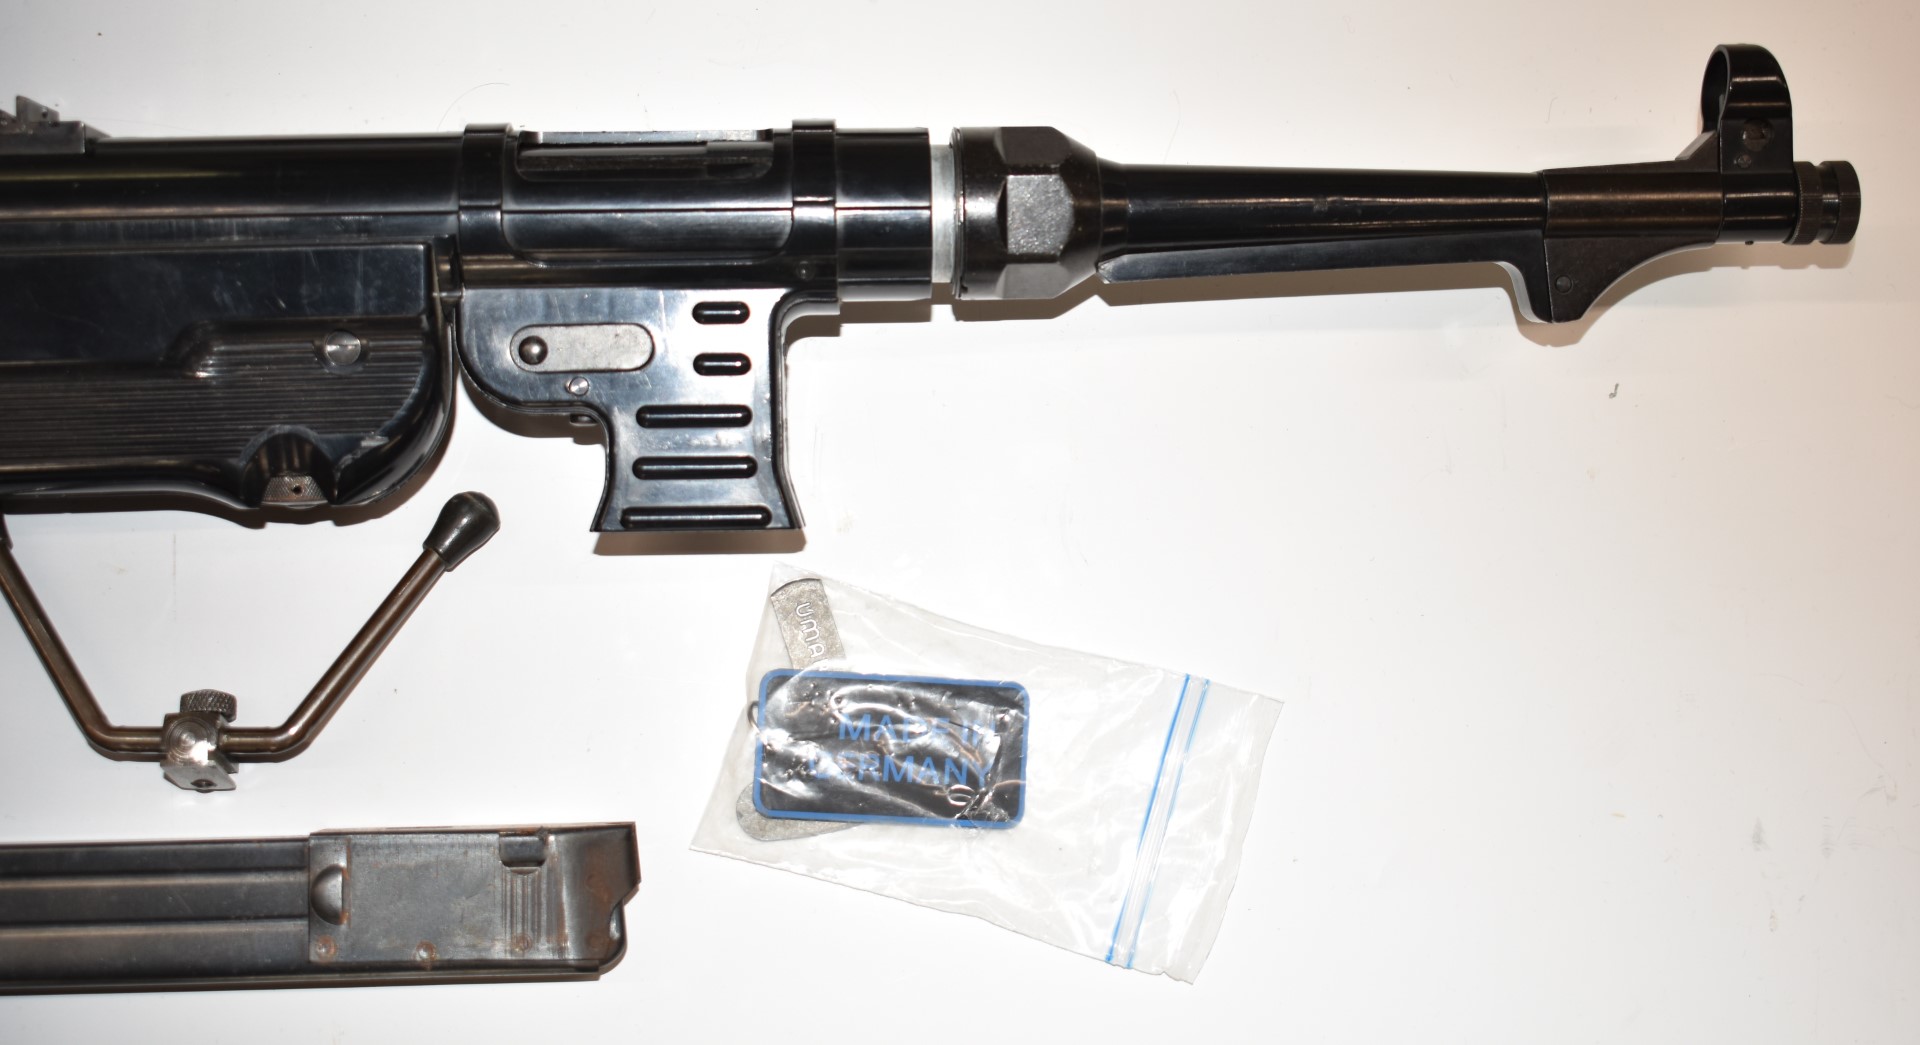 Marushin MP40 sub machine gun replica rifle with folding stock, extended magazine, pellet shells - Image 4 of 8